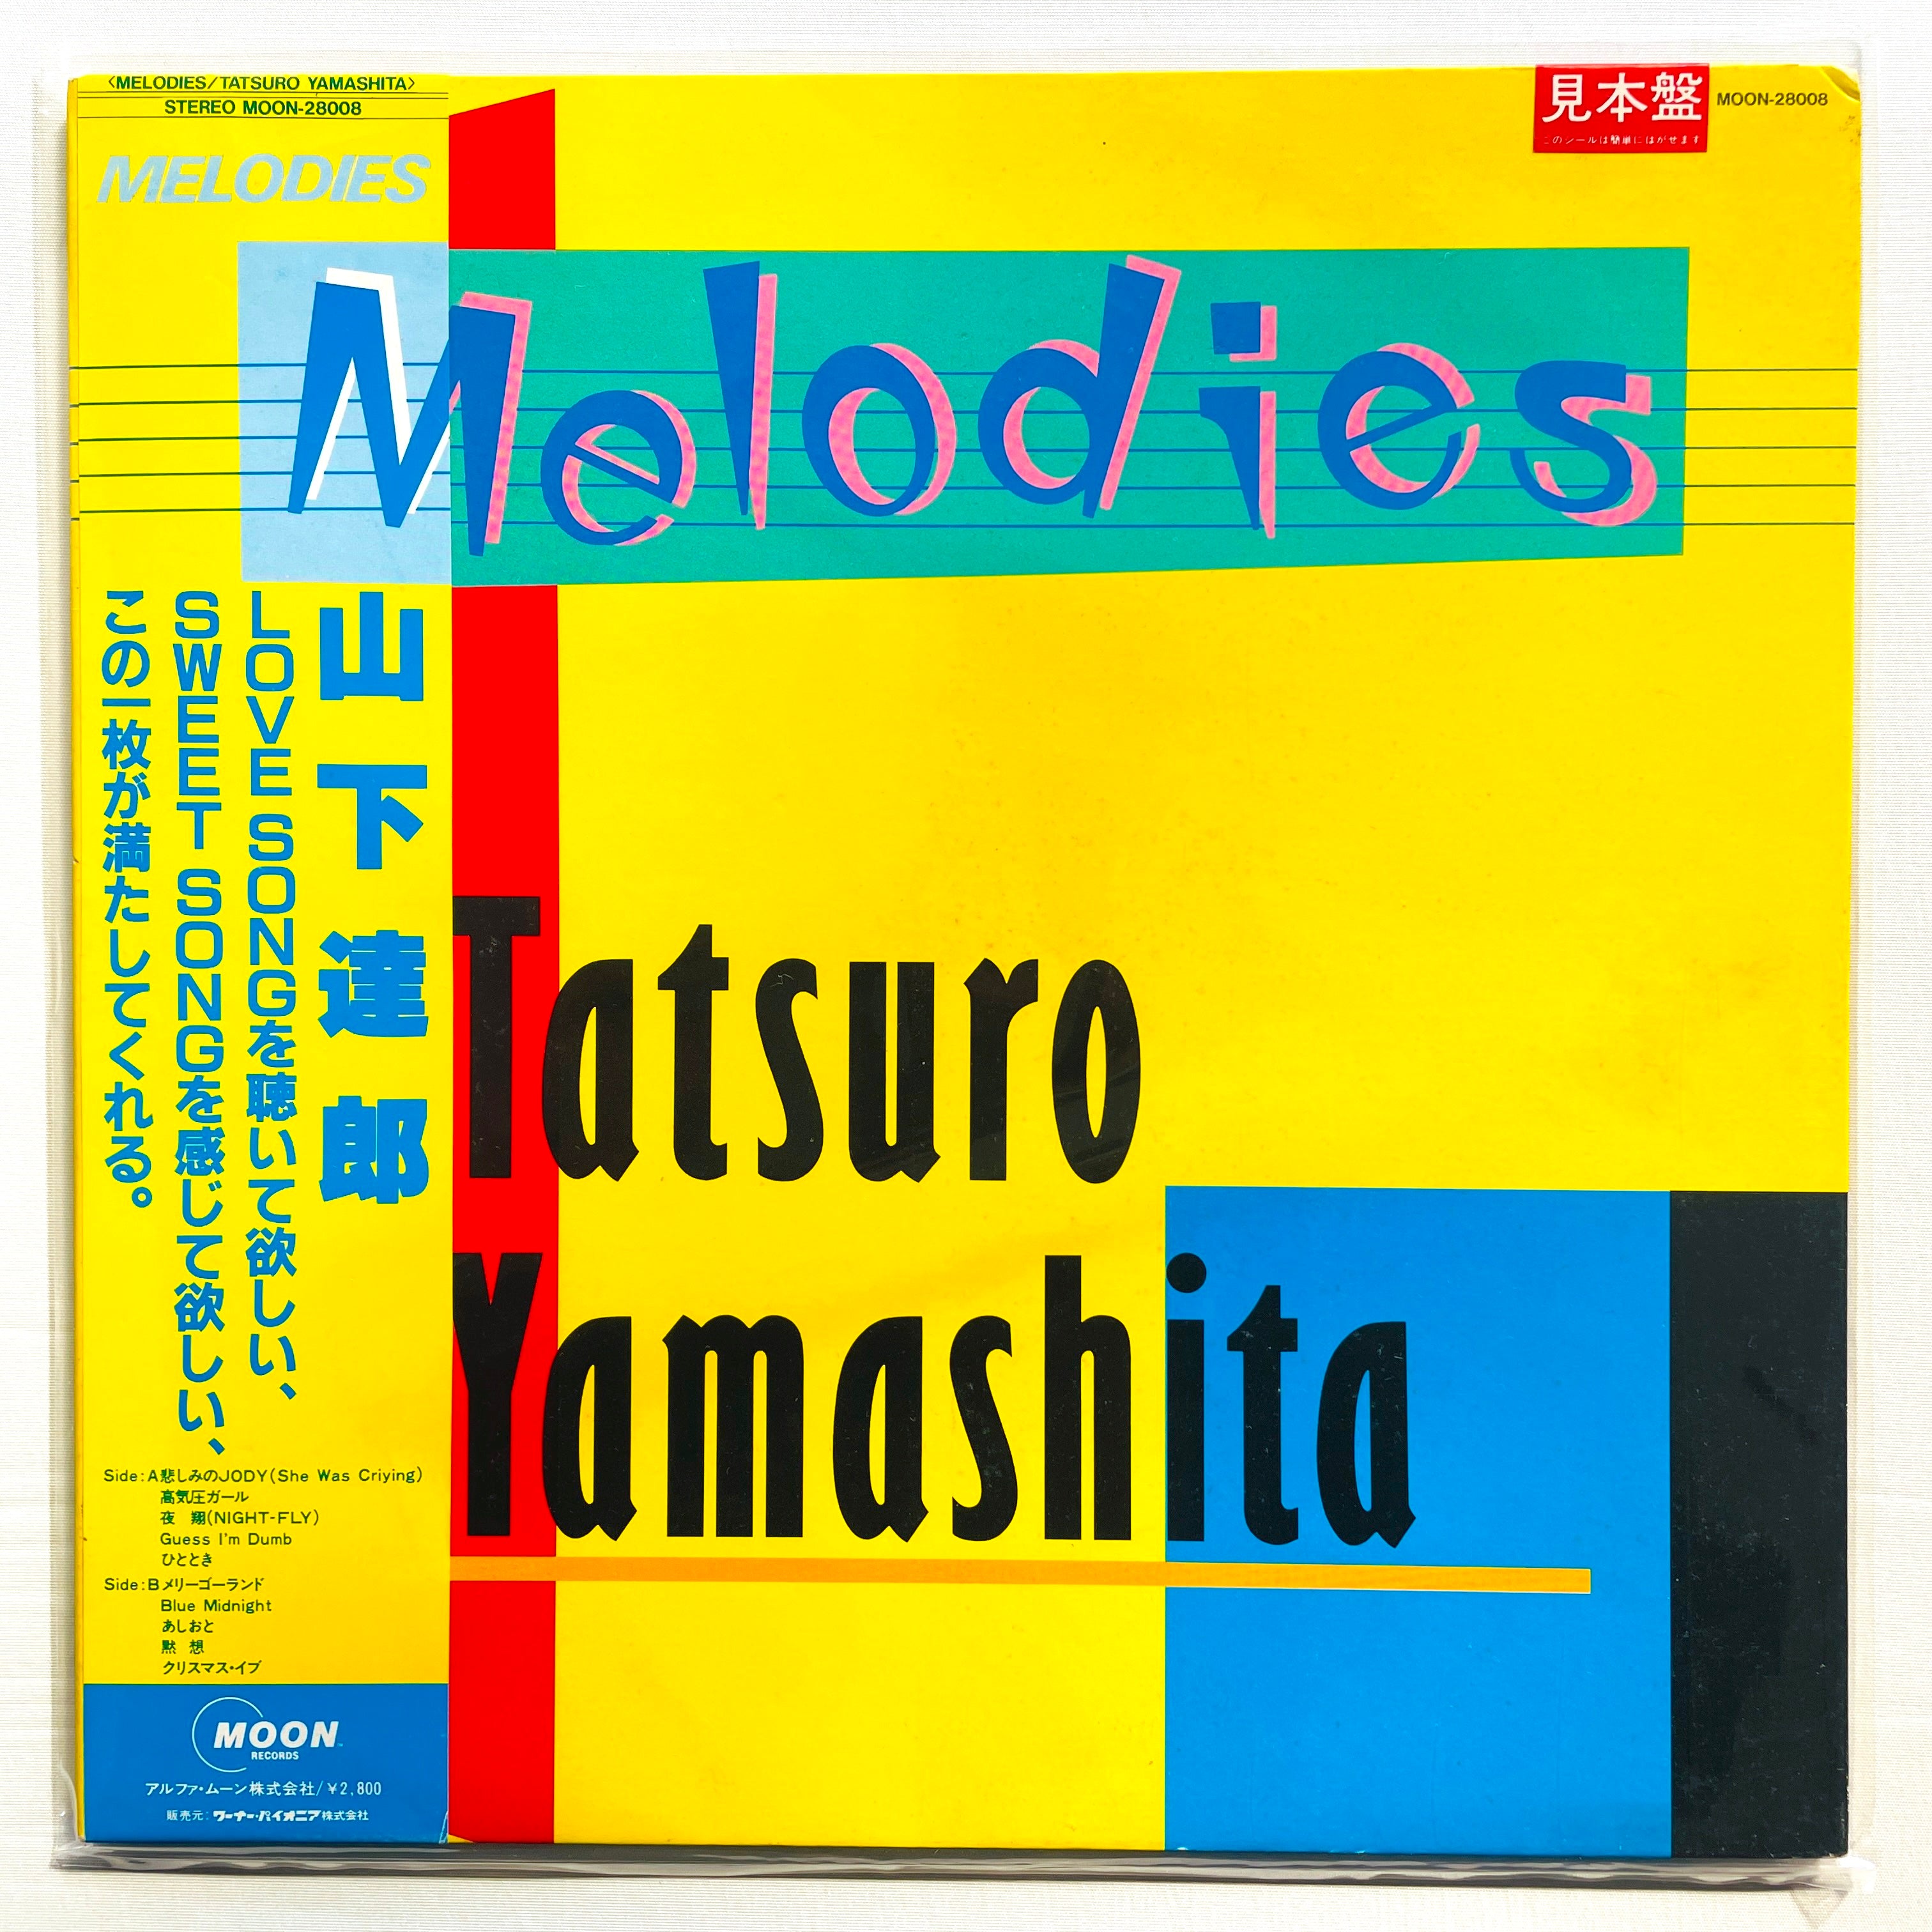 Tatsuro Yamashita - Melodies (Original, Promo) – Portal Records